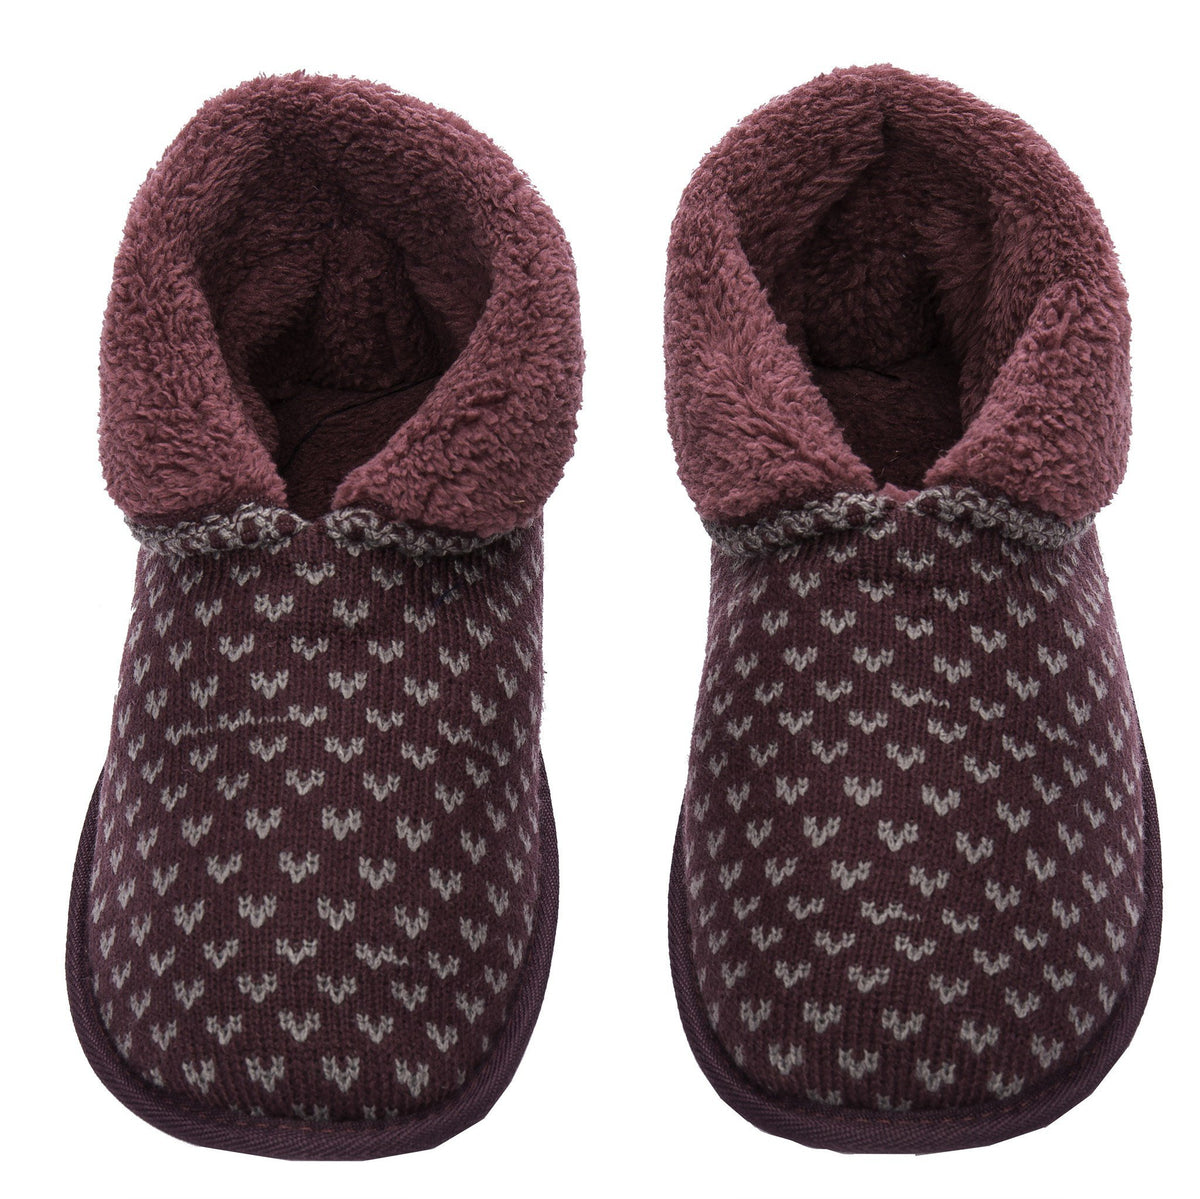 Men's Premium Knit Short Boot Slipper - Fig/Charcoal